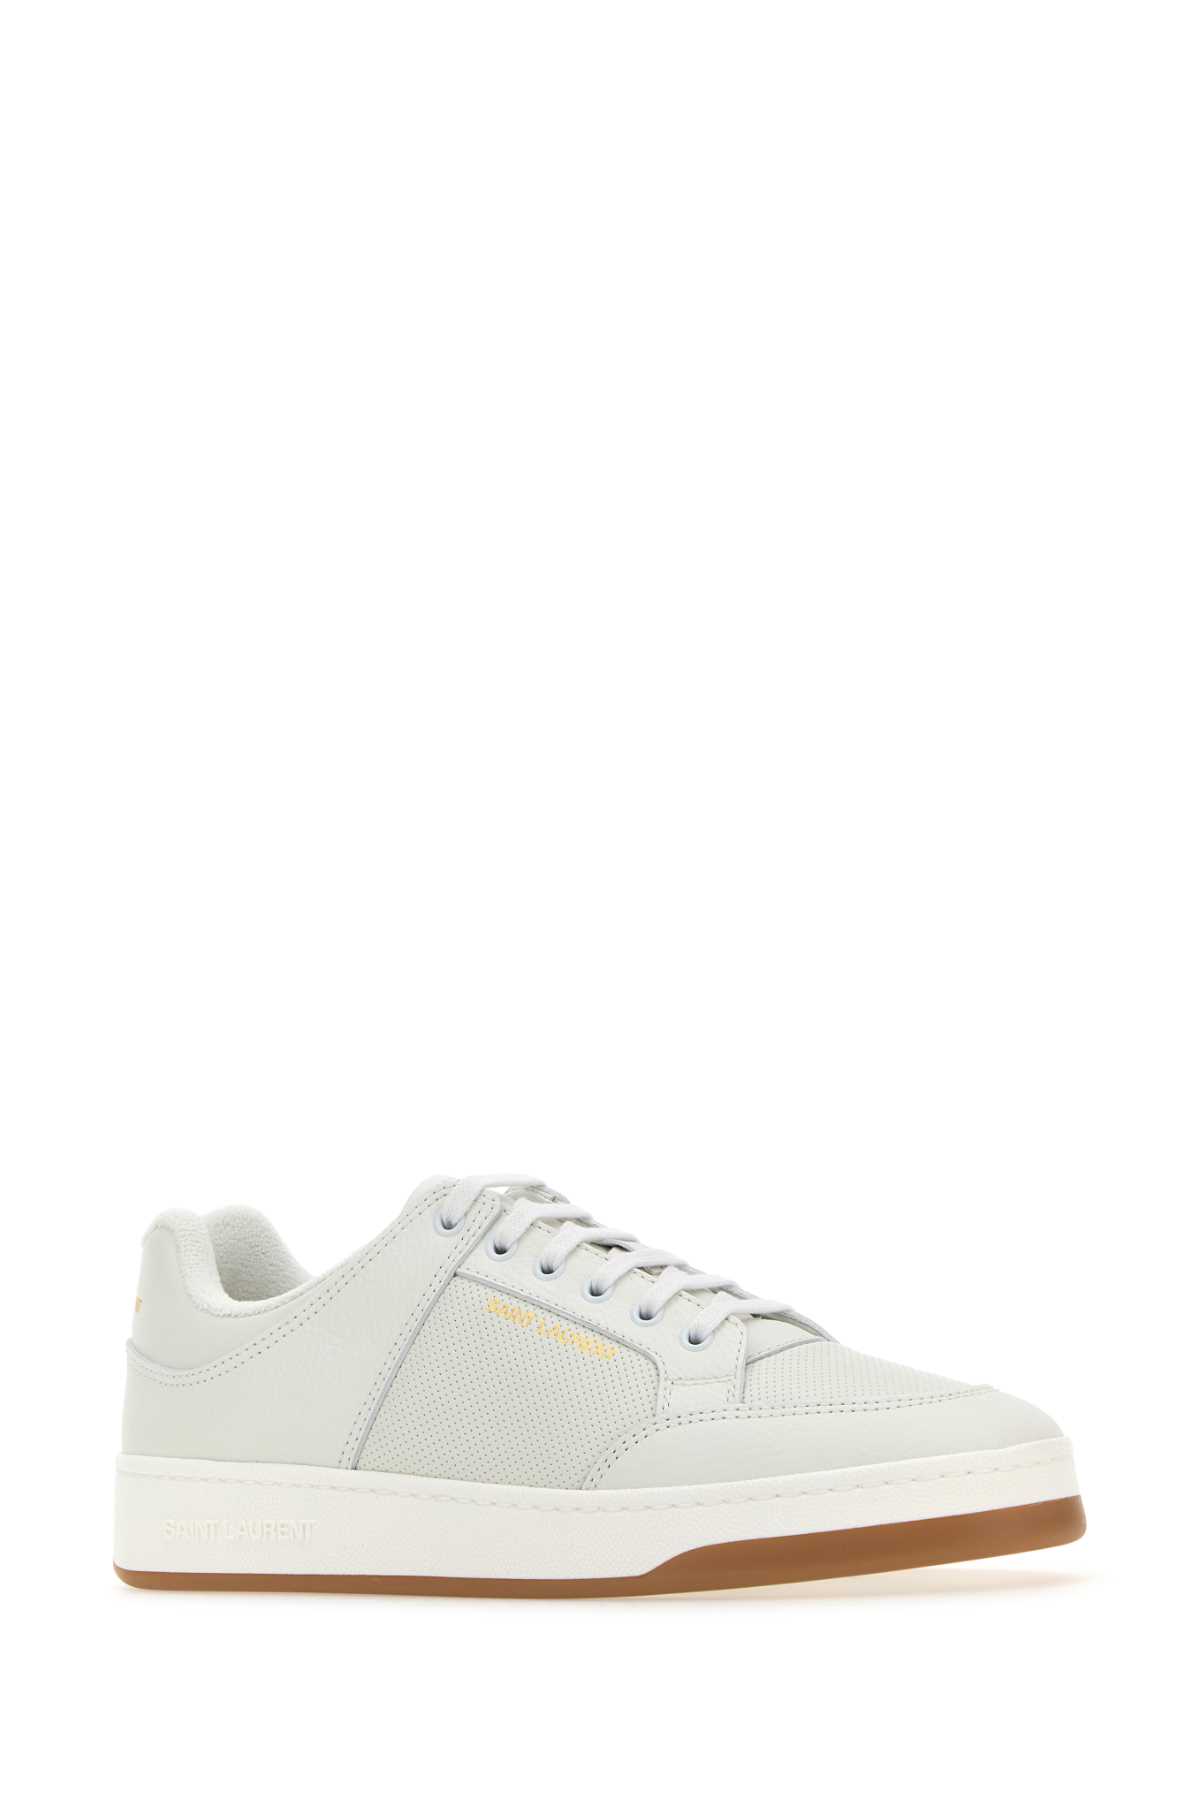 Saint Laurent White Leather Sl/16 Sneakers